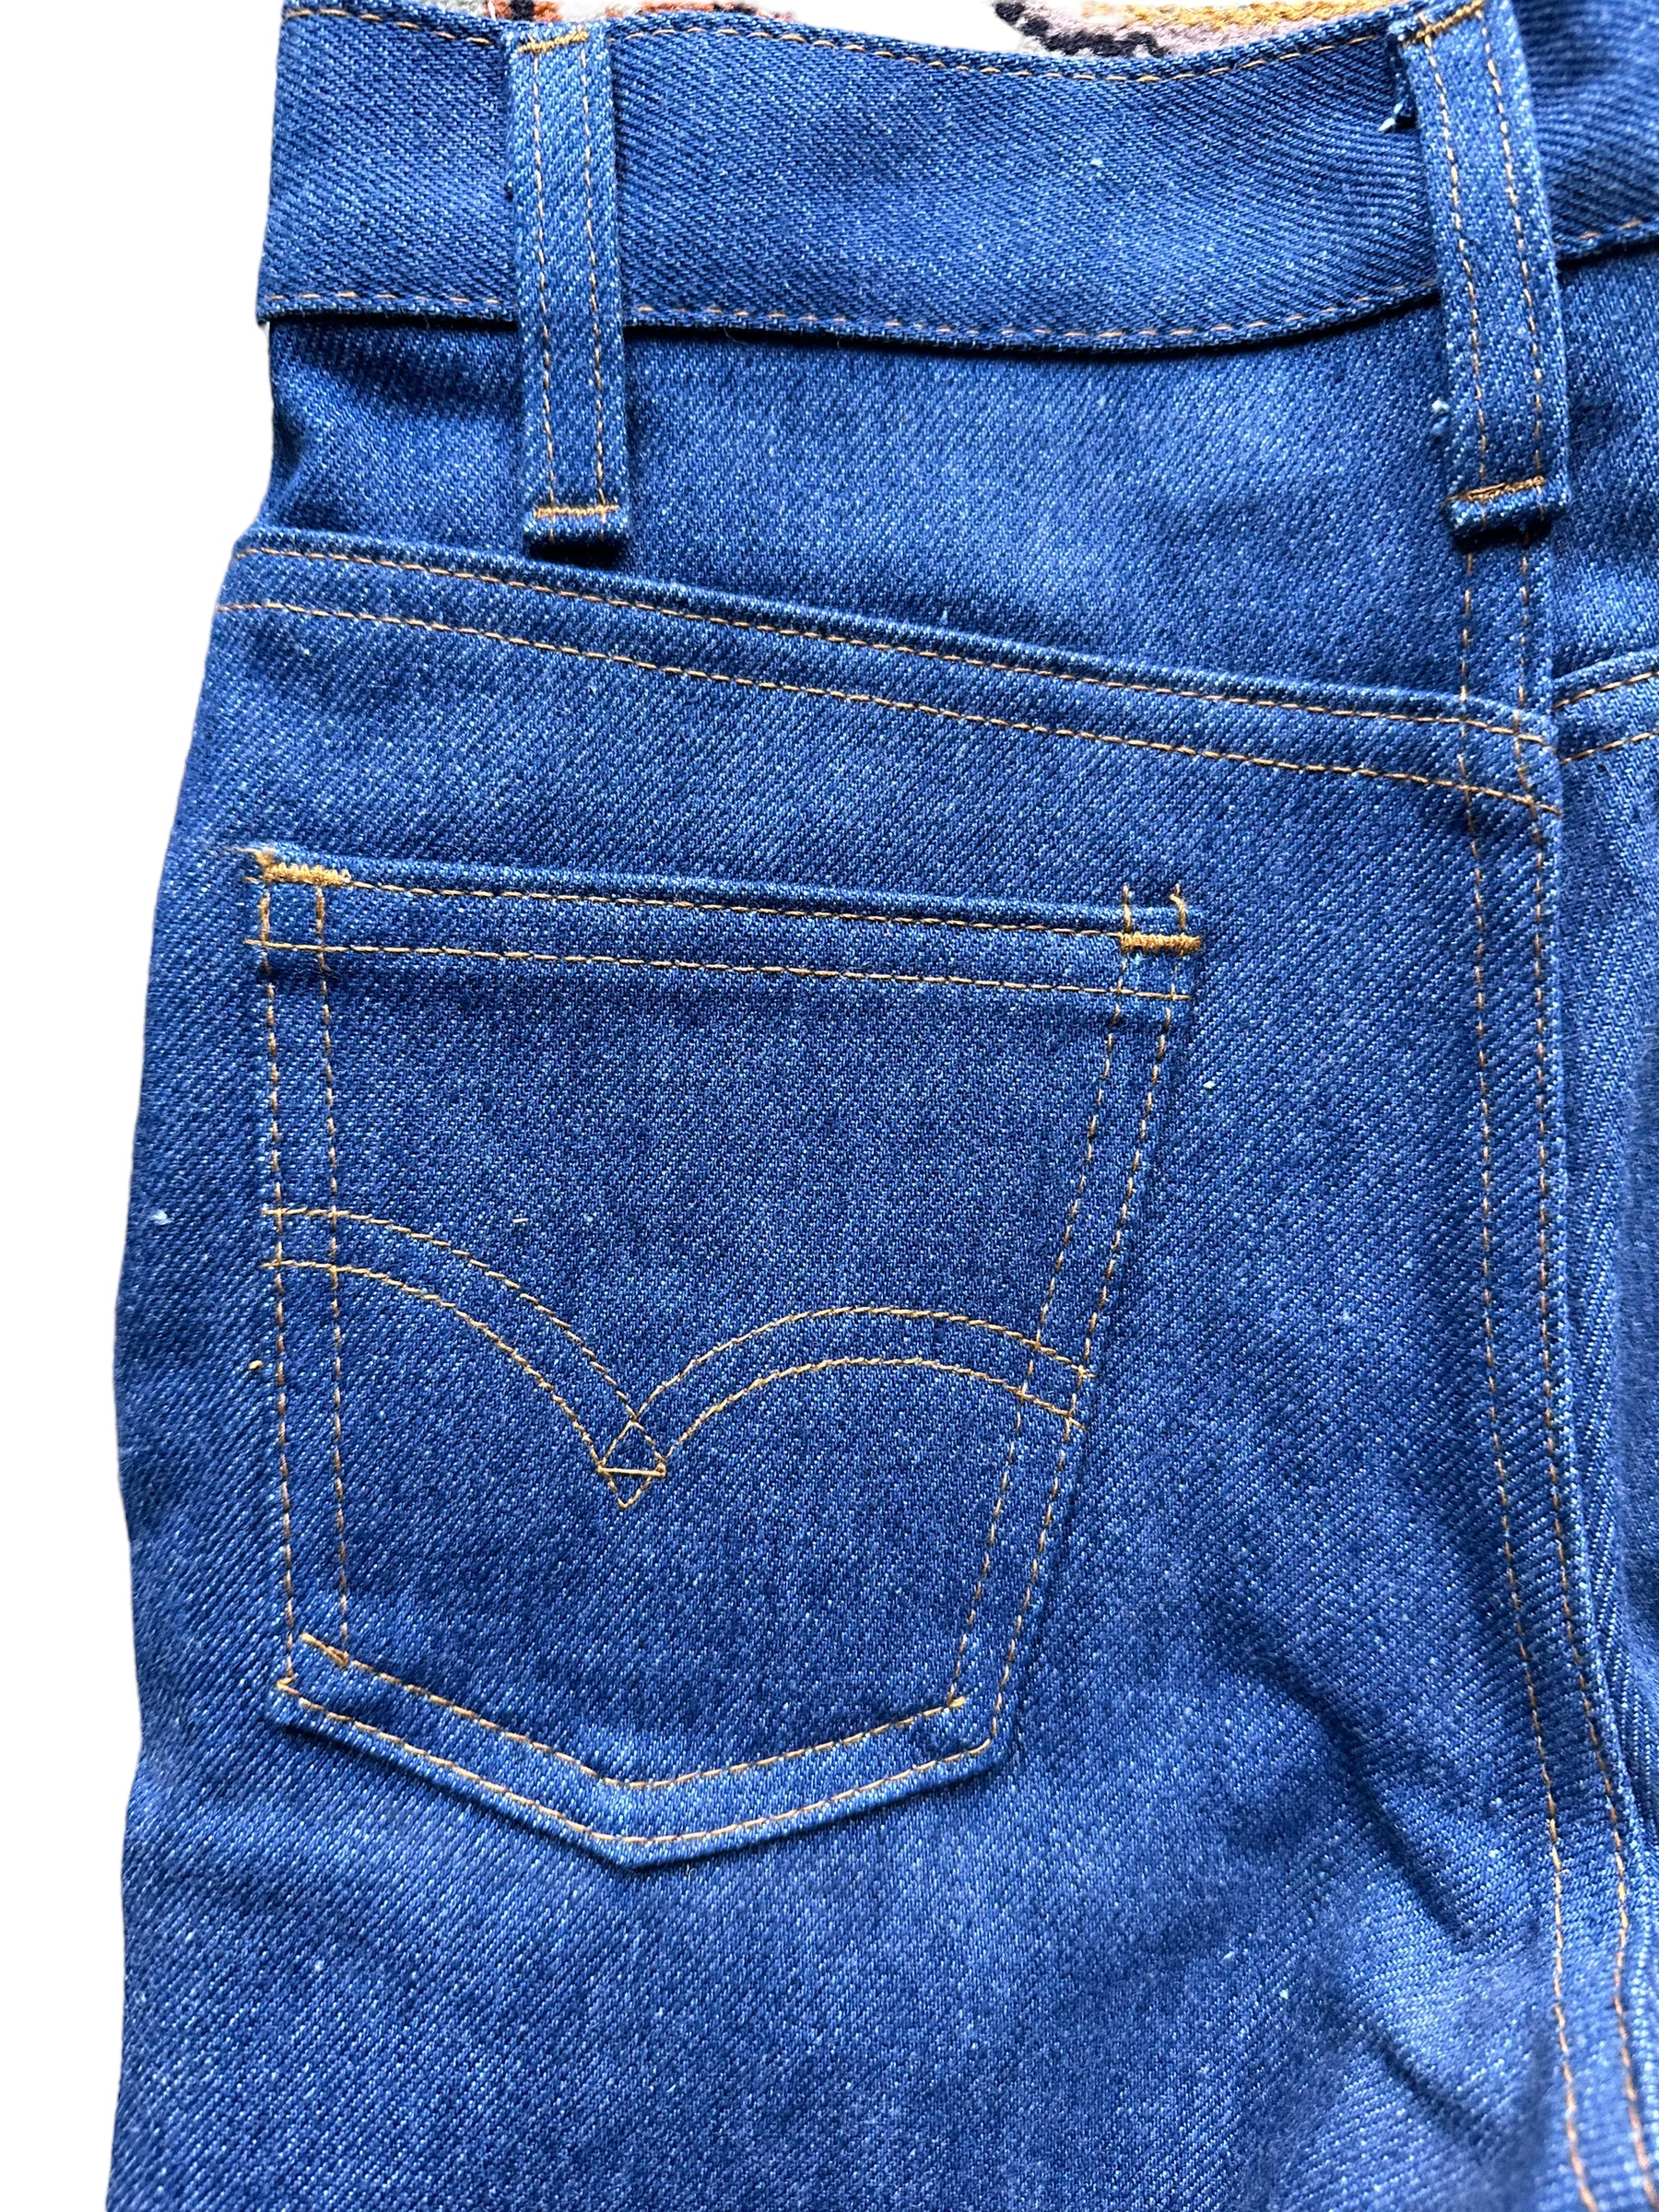 Back left pocket view of Vintage Deadstock Saddleman Boot Cut Jeans 24x23 | Seattle Kid's Vintage | Barn Owl Deadstock Levi's